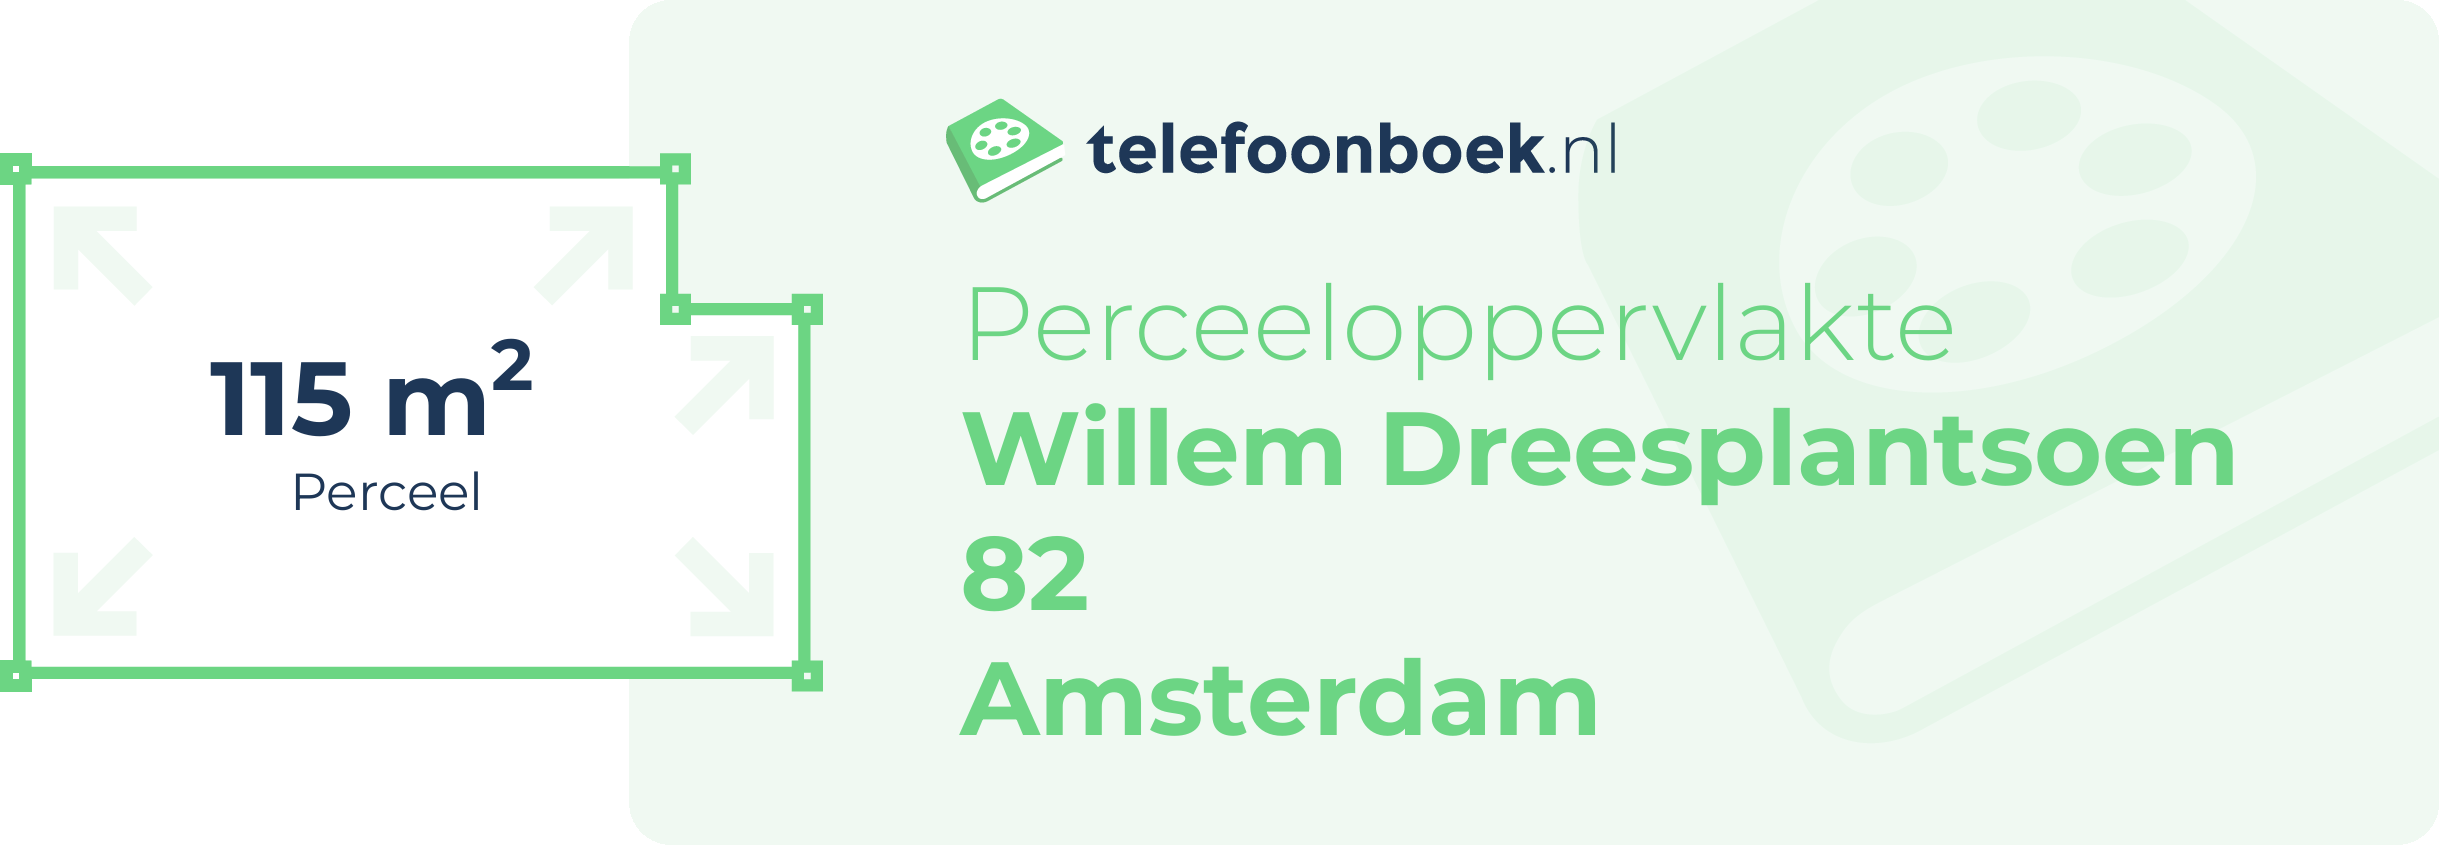 Perceeloppervlakte Willem Dreesplantsoen 82 Amsterdam